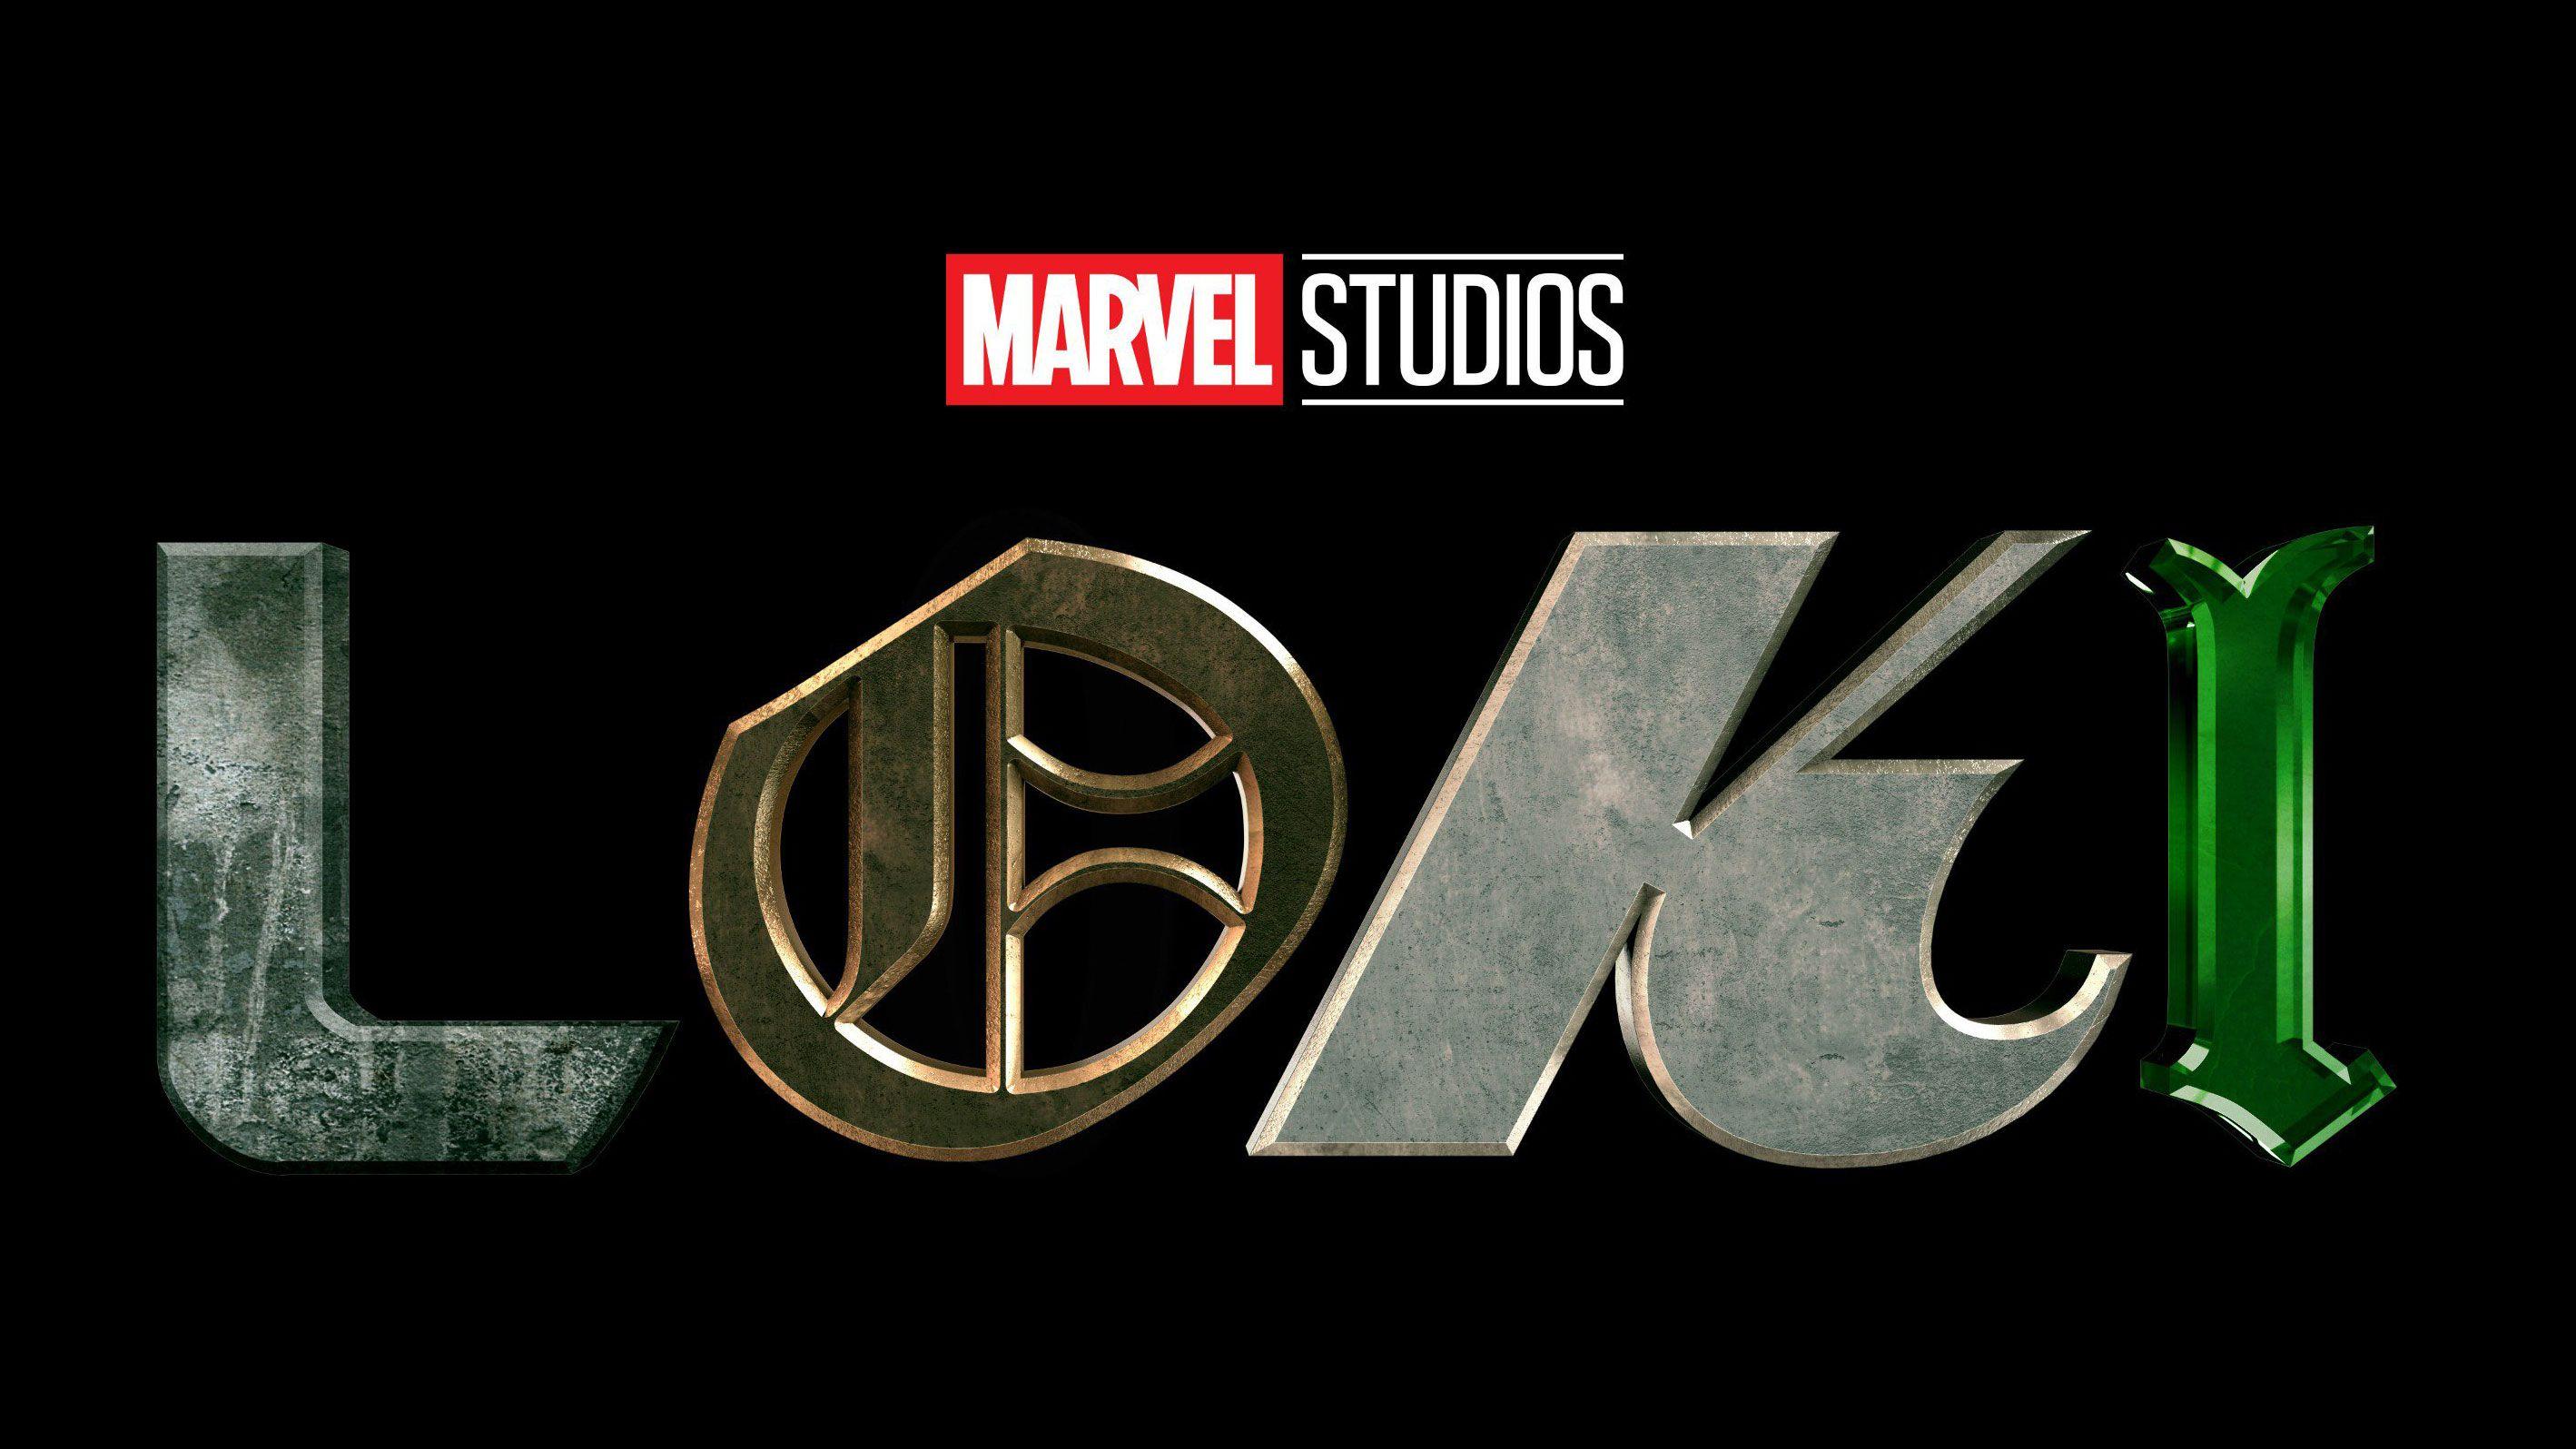 Loki Logo - New Marvel logos include this Loki abomination | Creative Bloq